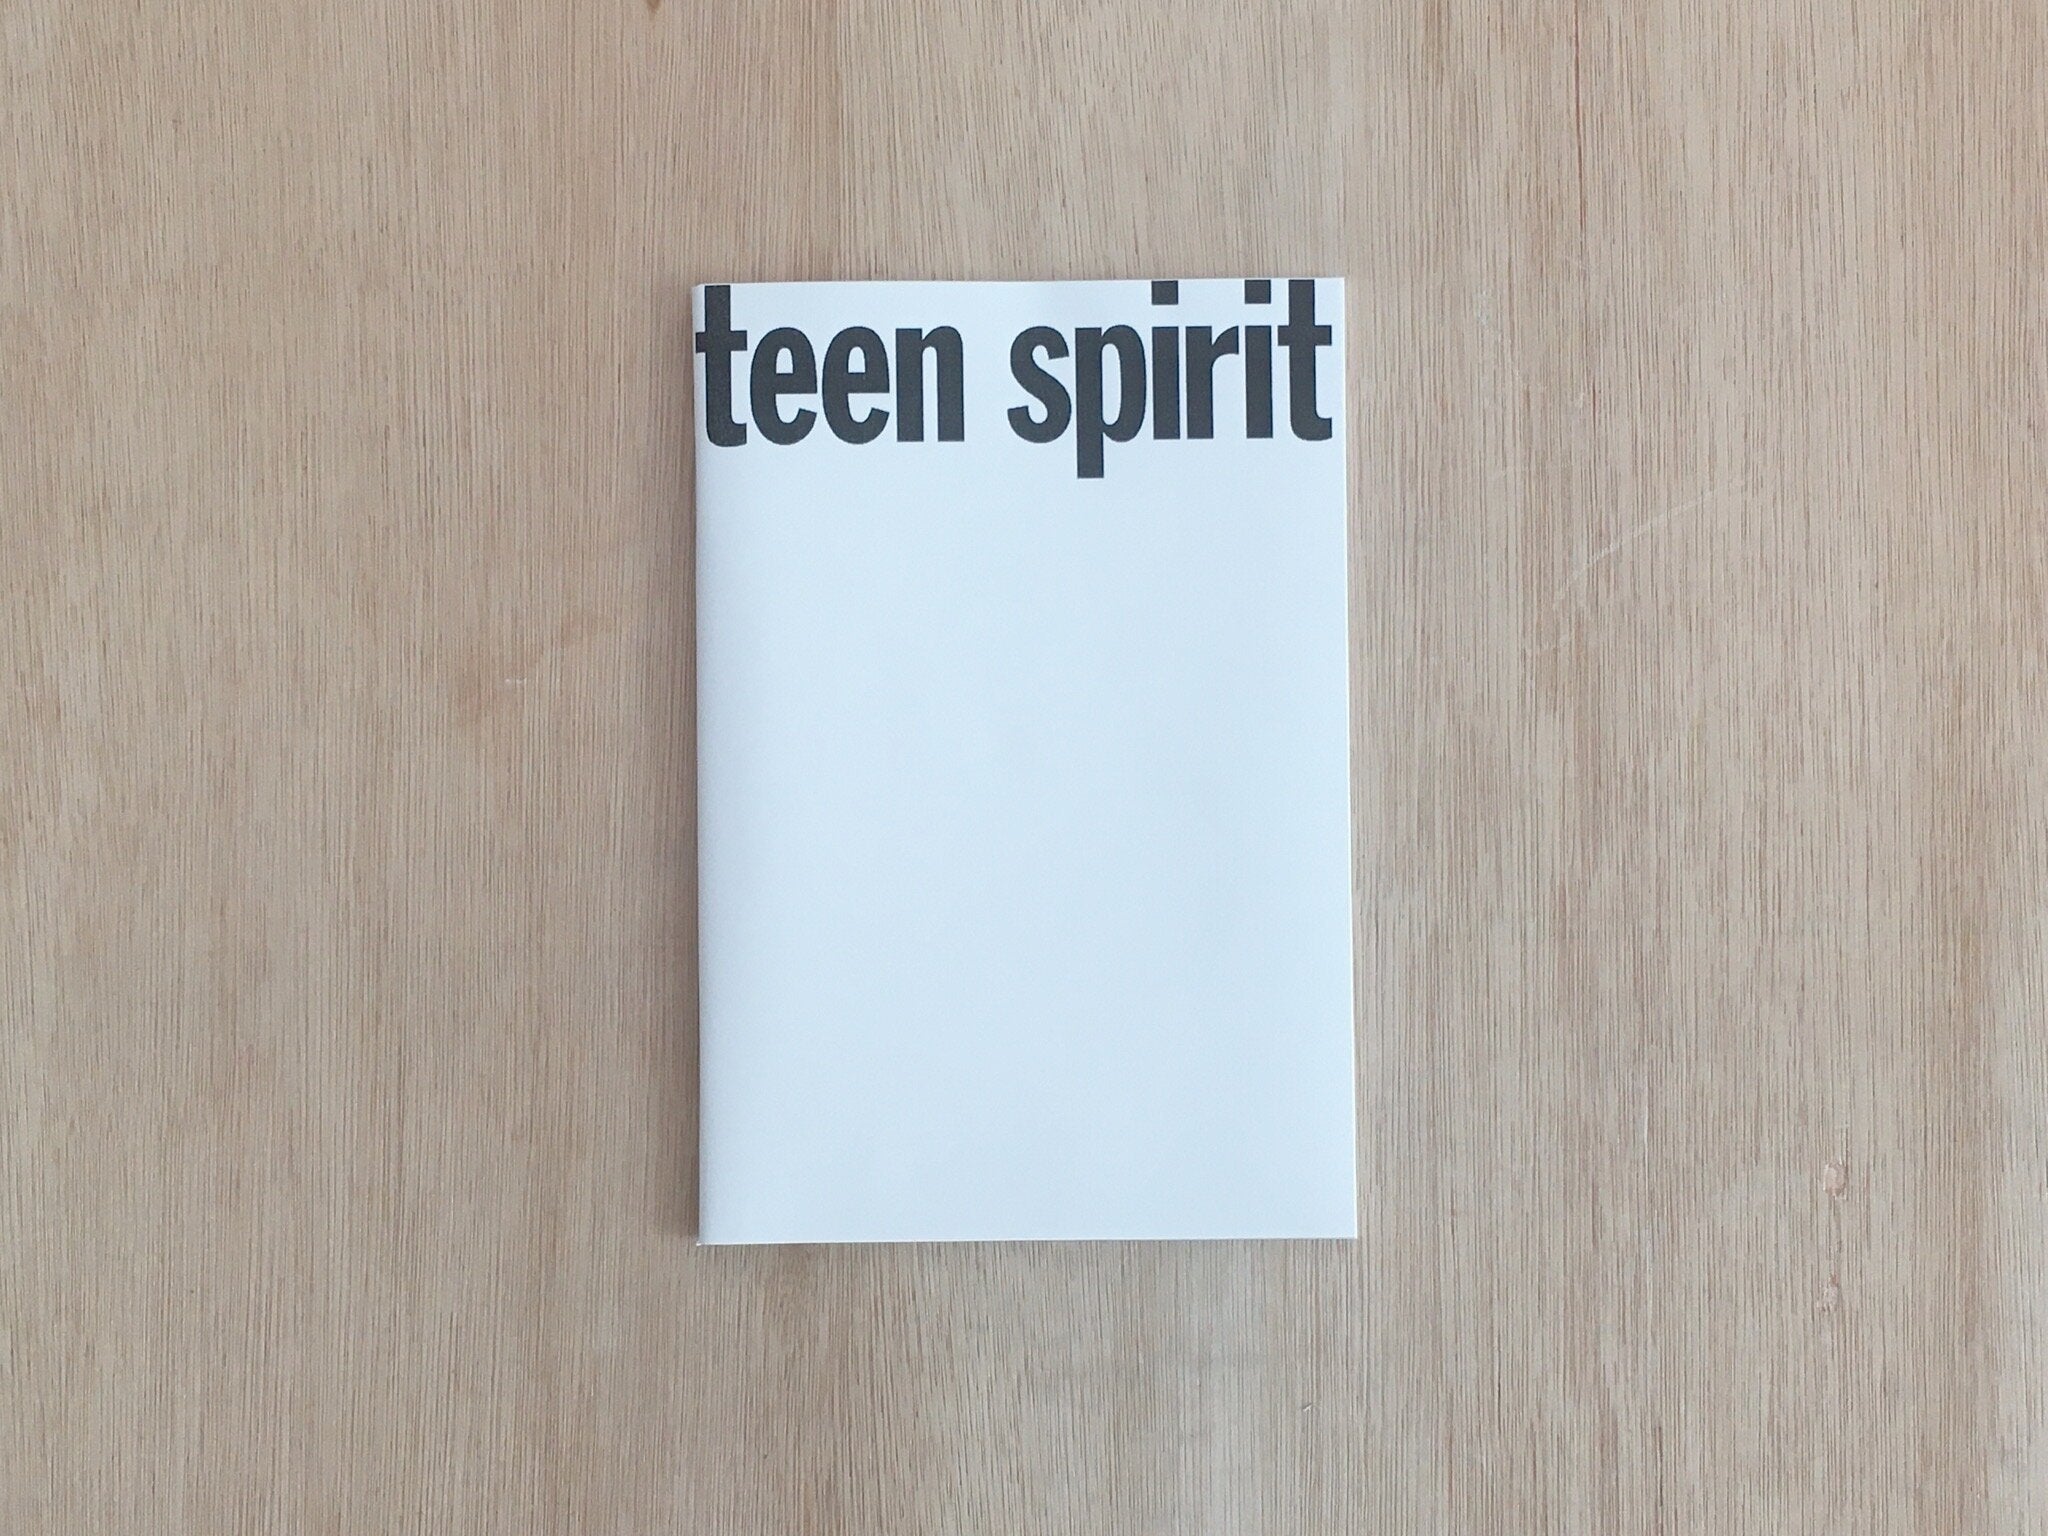 TEEN SPIRIT by Évita Yumul